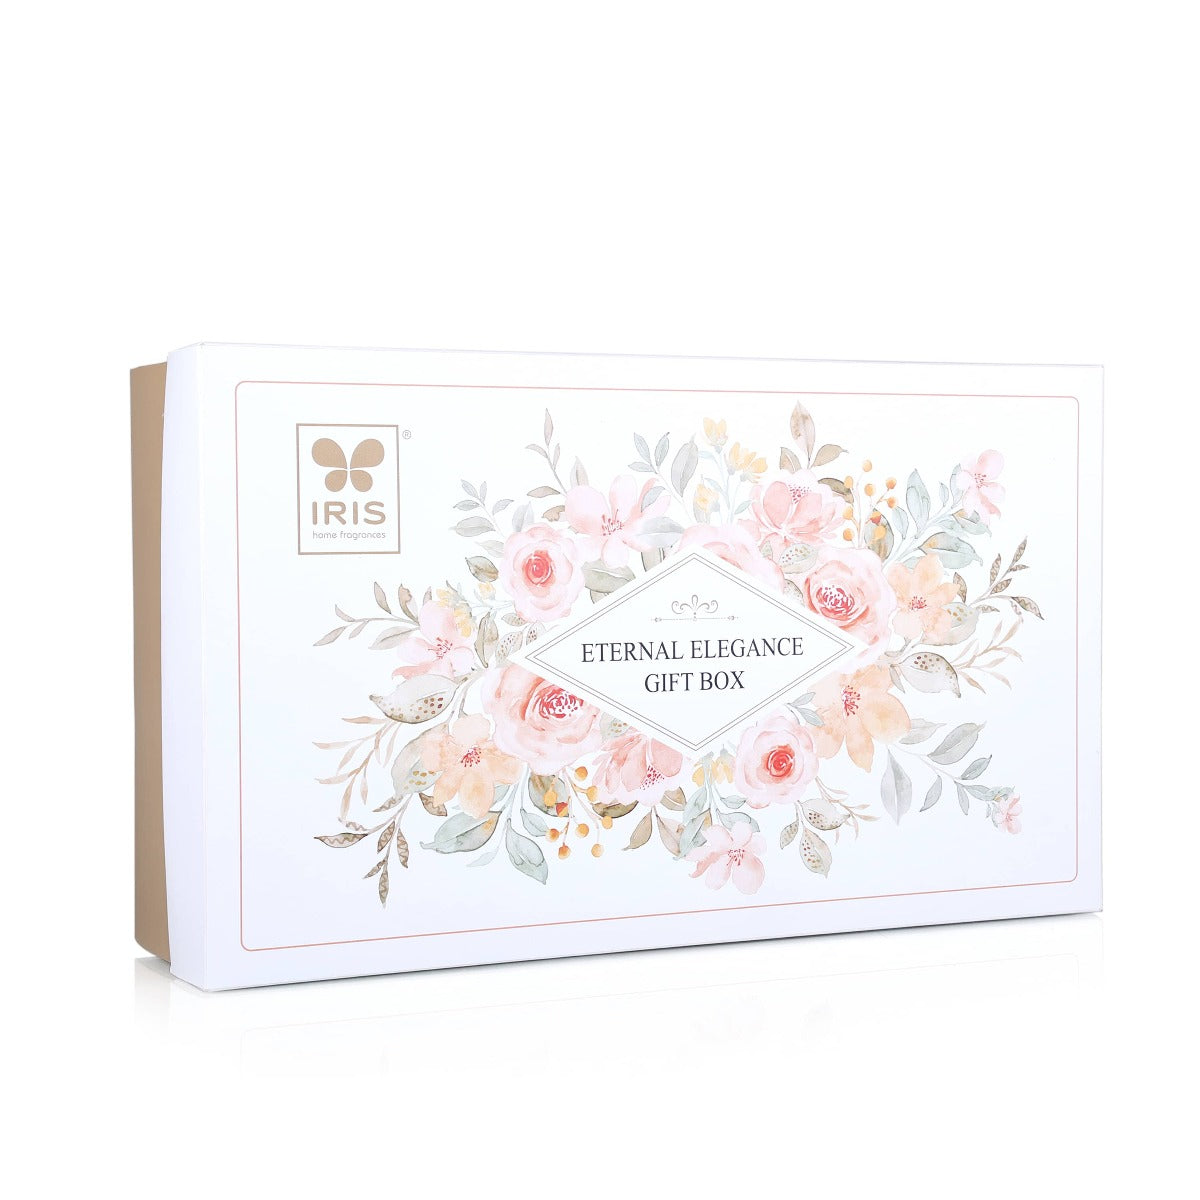 IRIS Eternal Elegance Gift Box